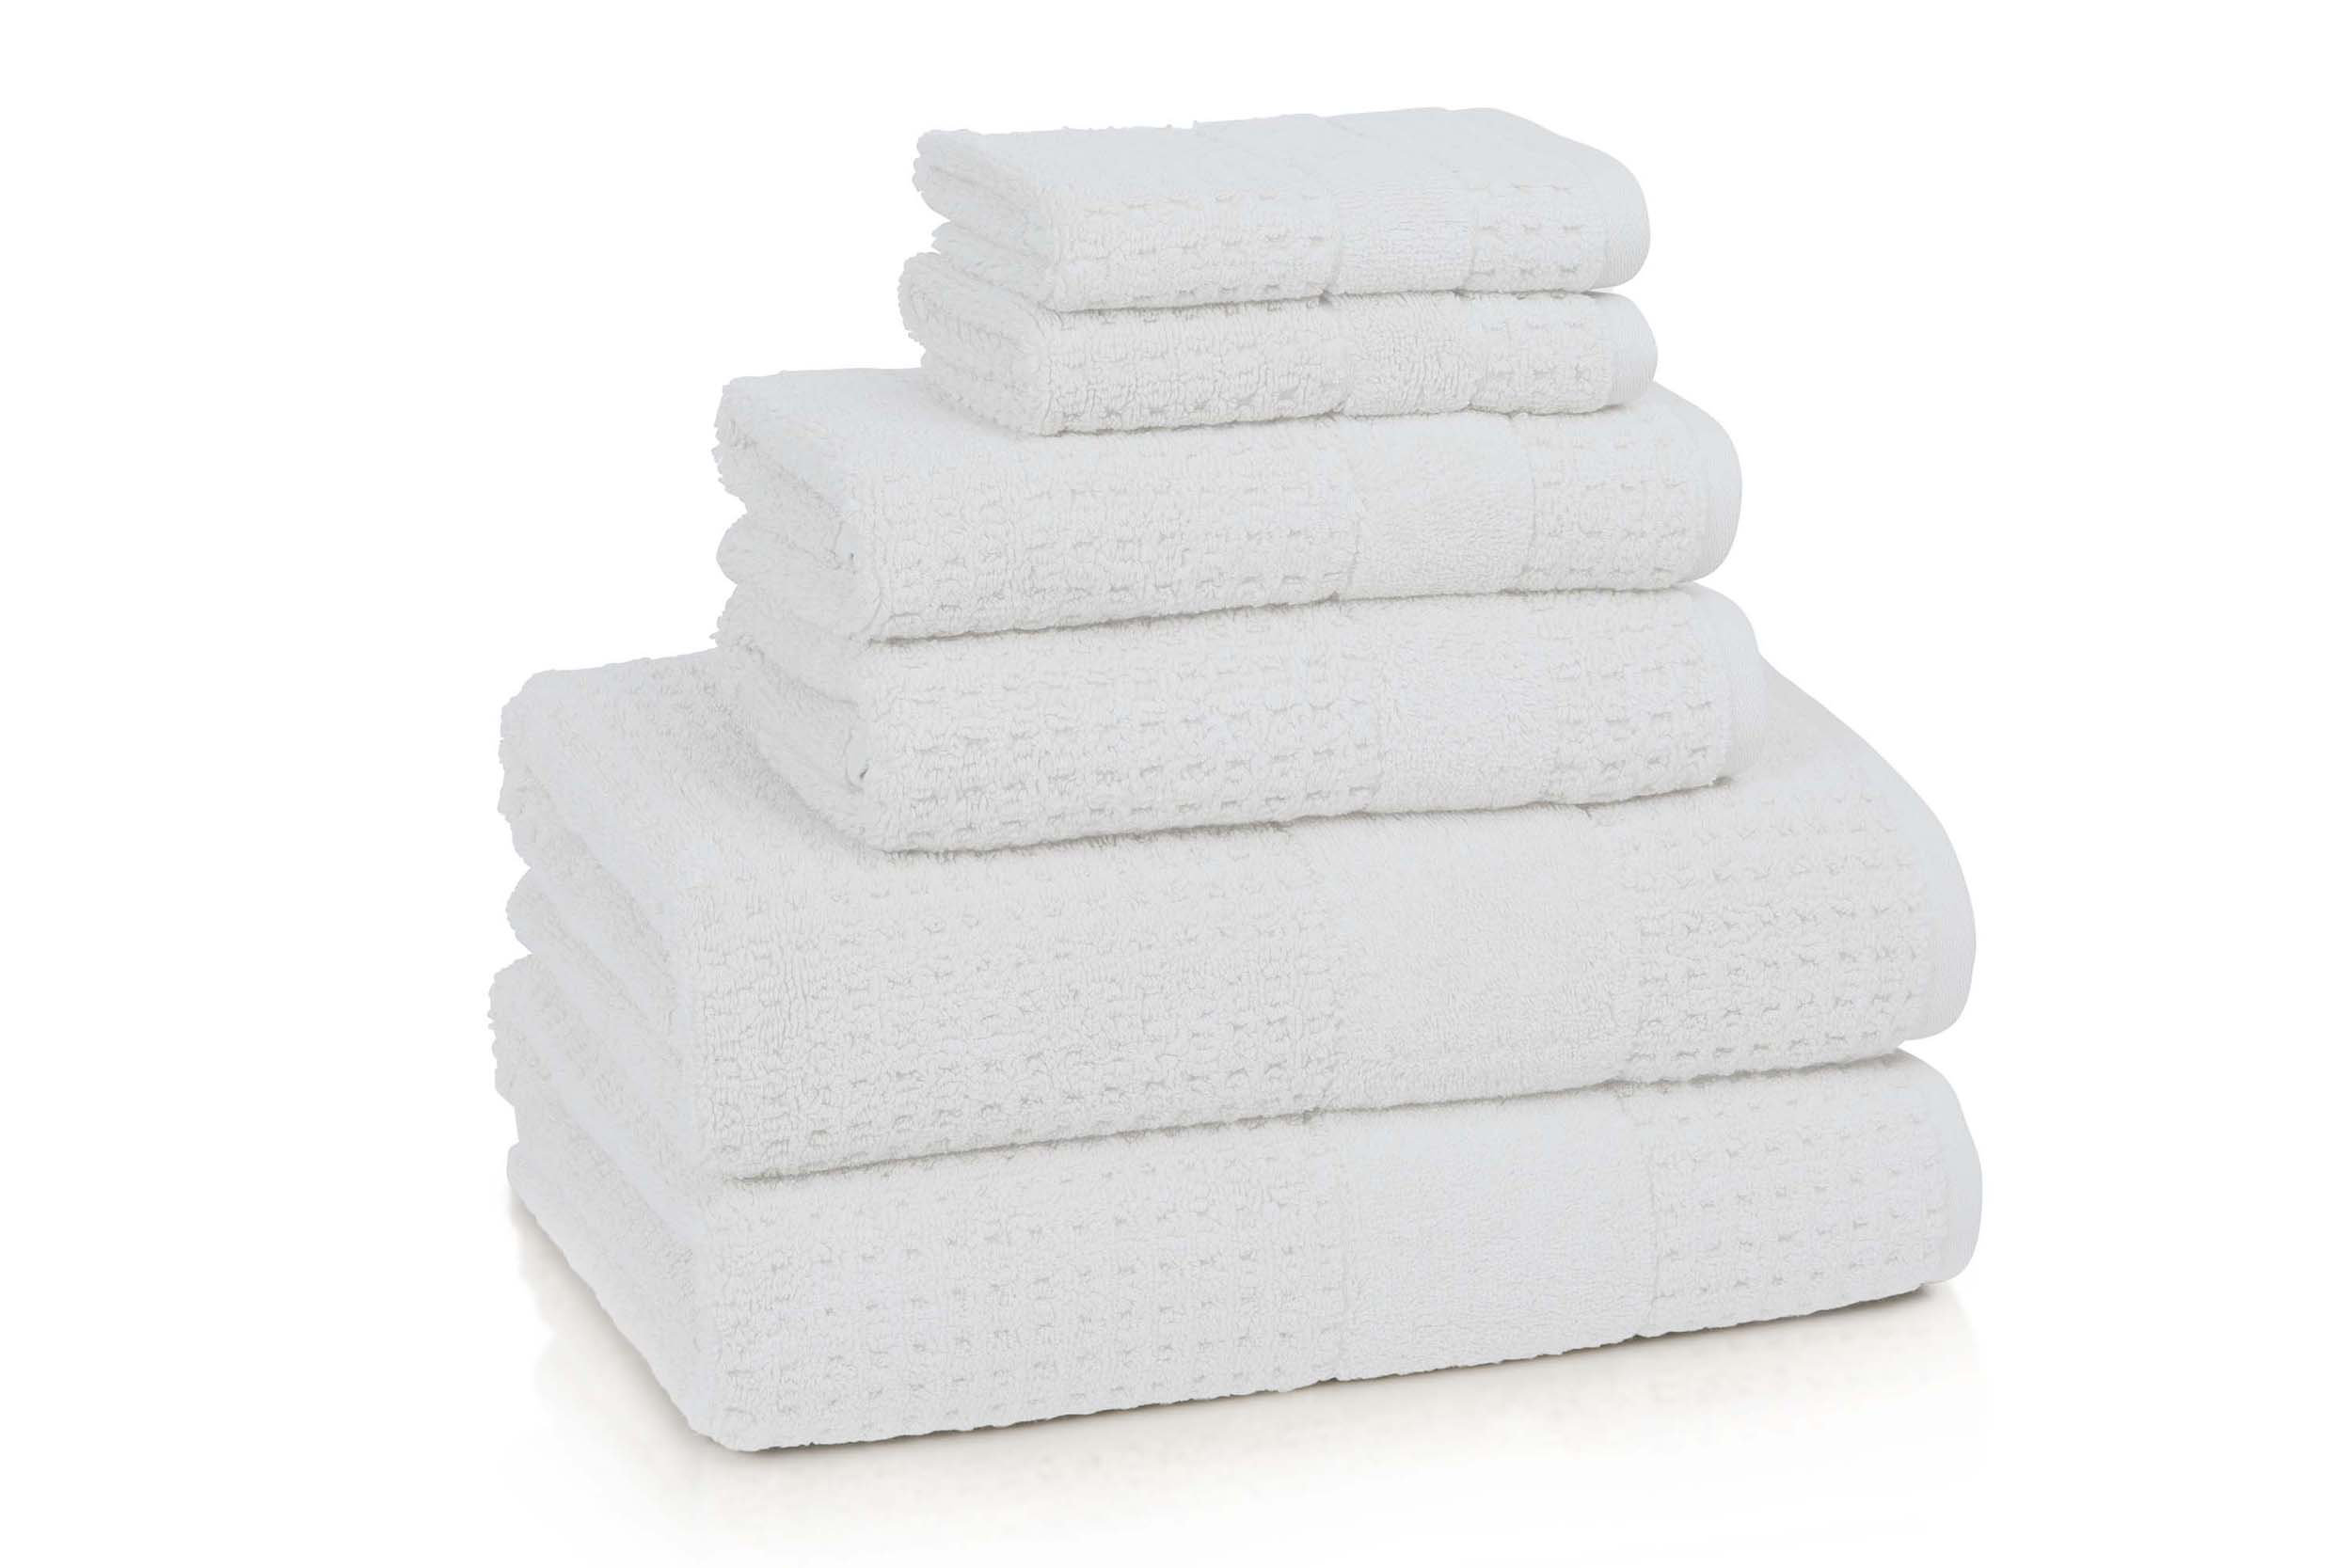 2 Piece Turkish Cotton Bath Towel Set Melissa Linen Color: Dark Gray